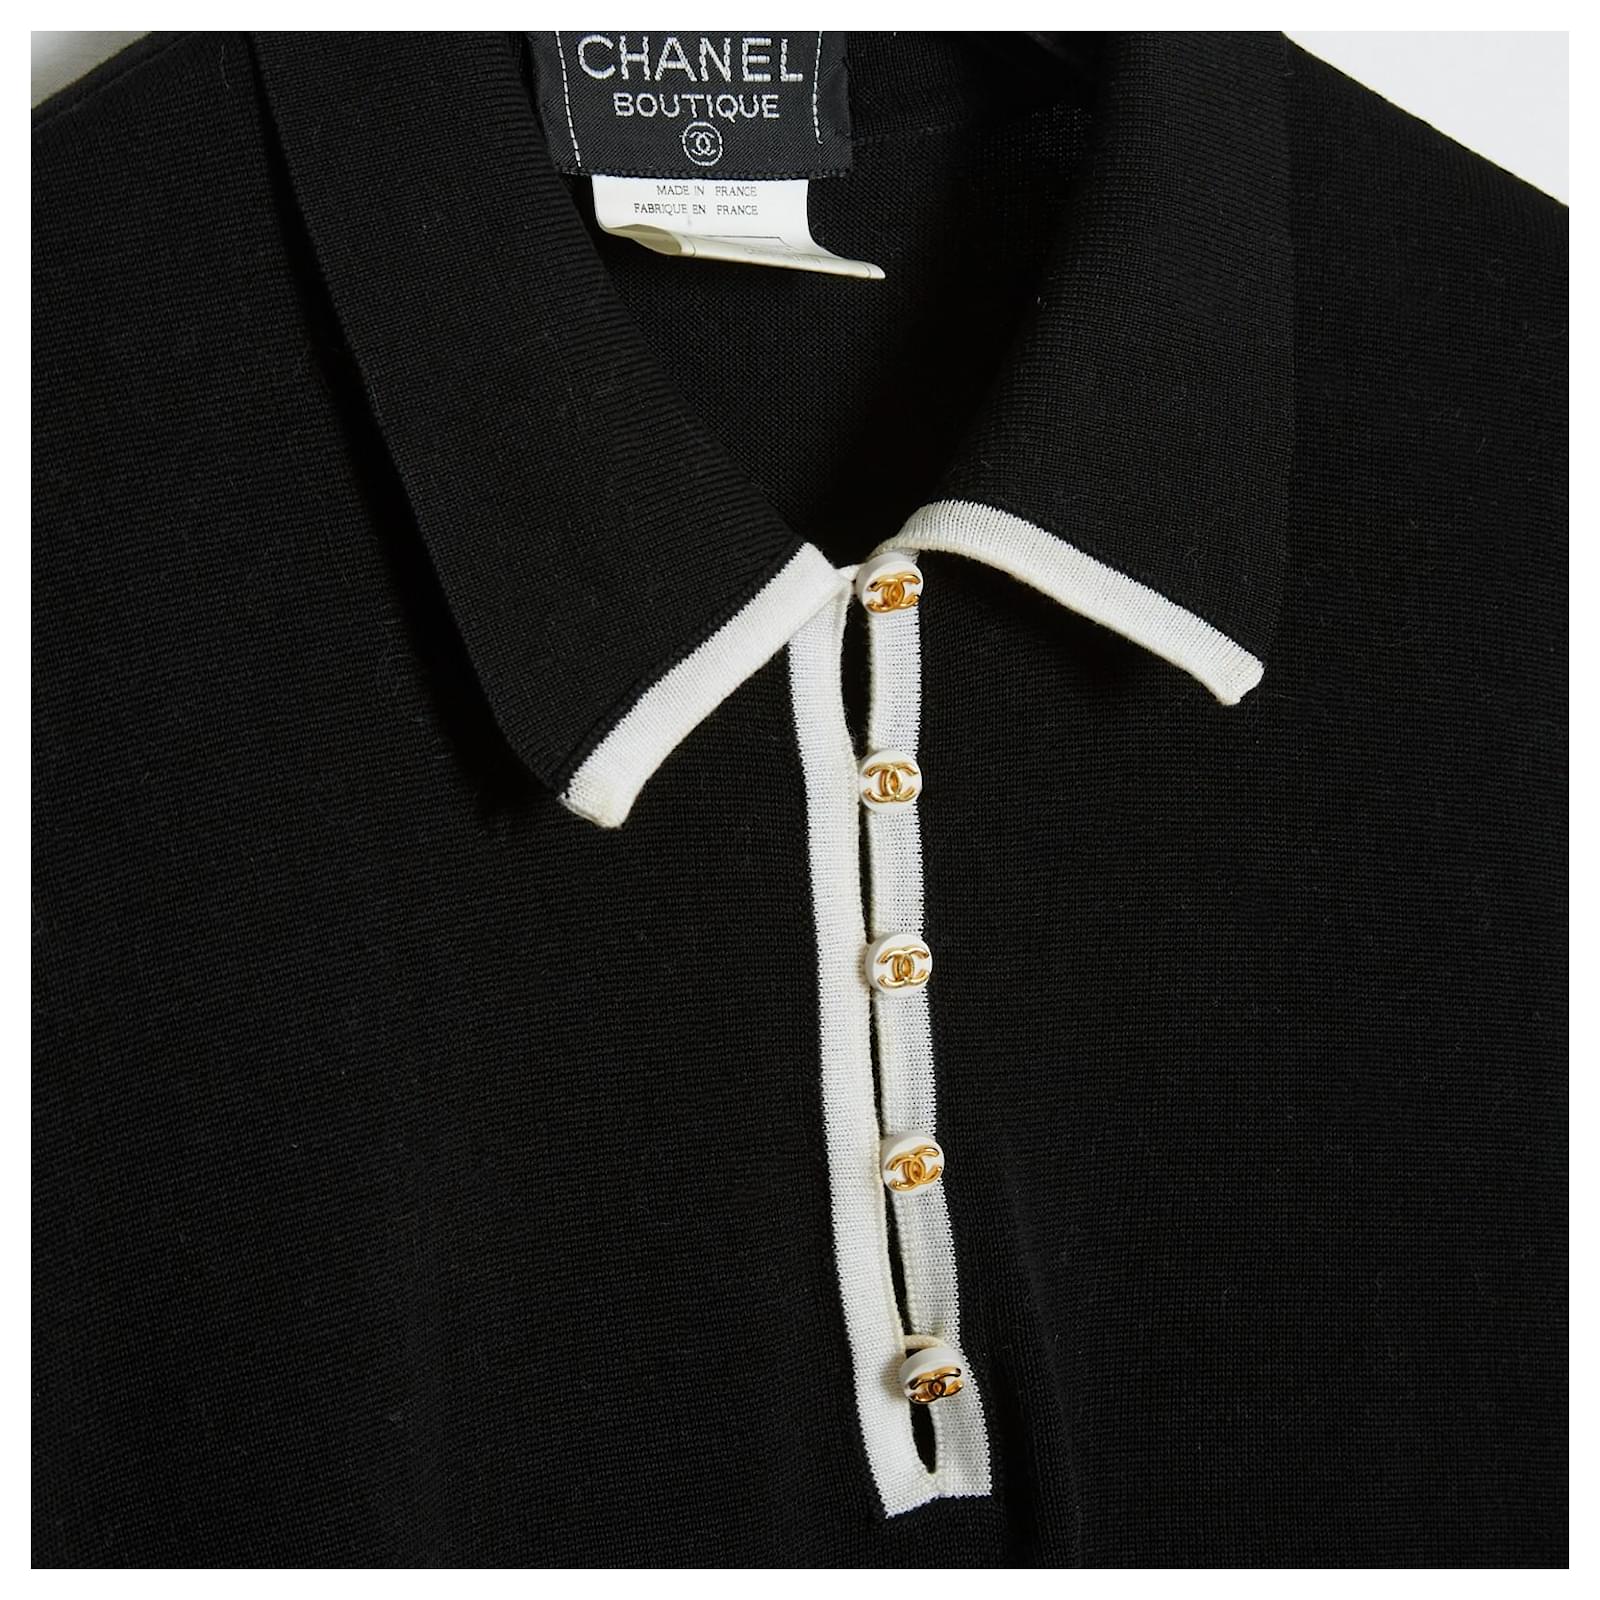 Tops Chanel 98C Top Polo EN36/40 Black Ivory Size 36 FR